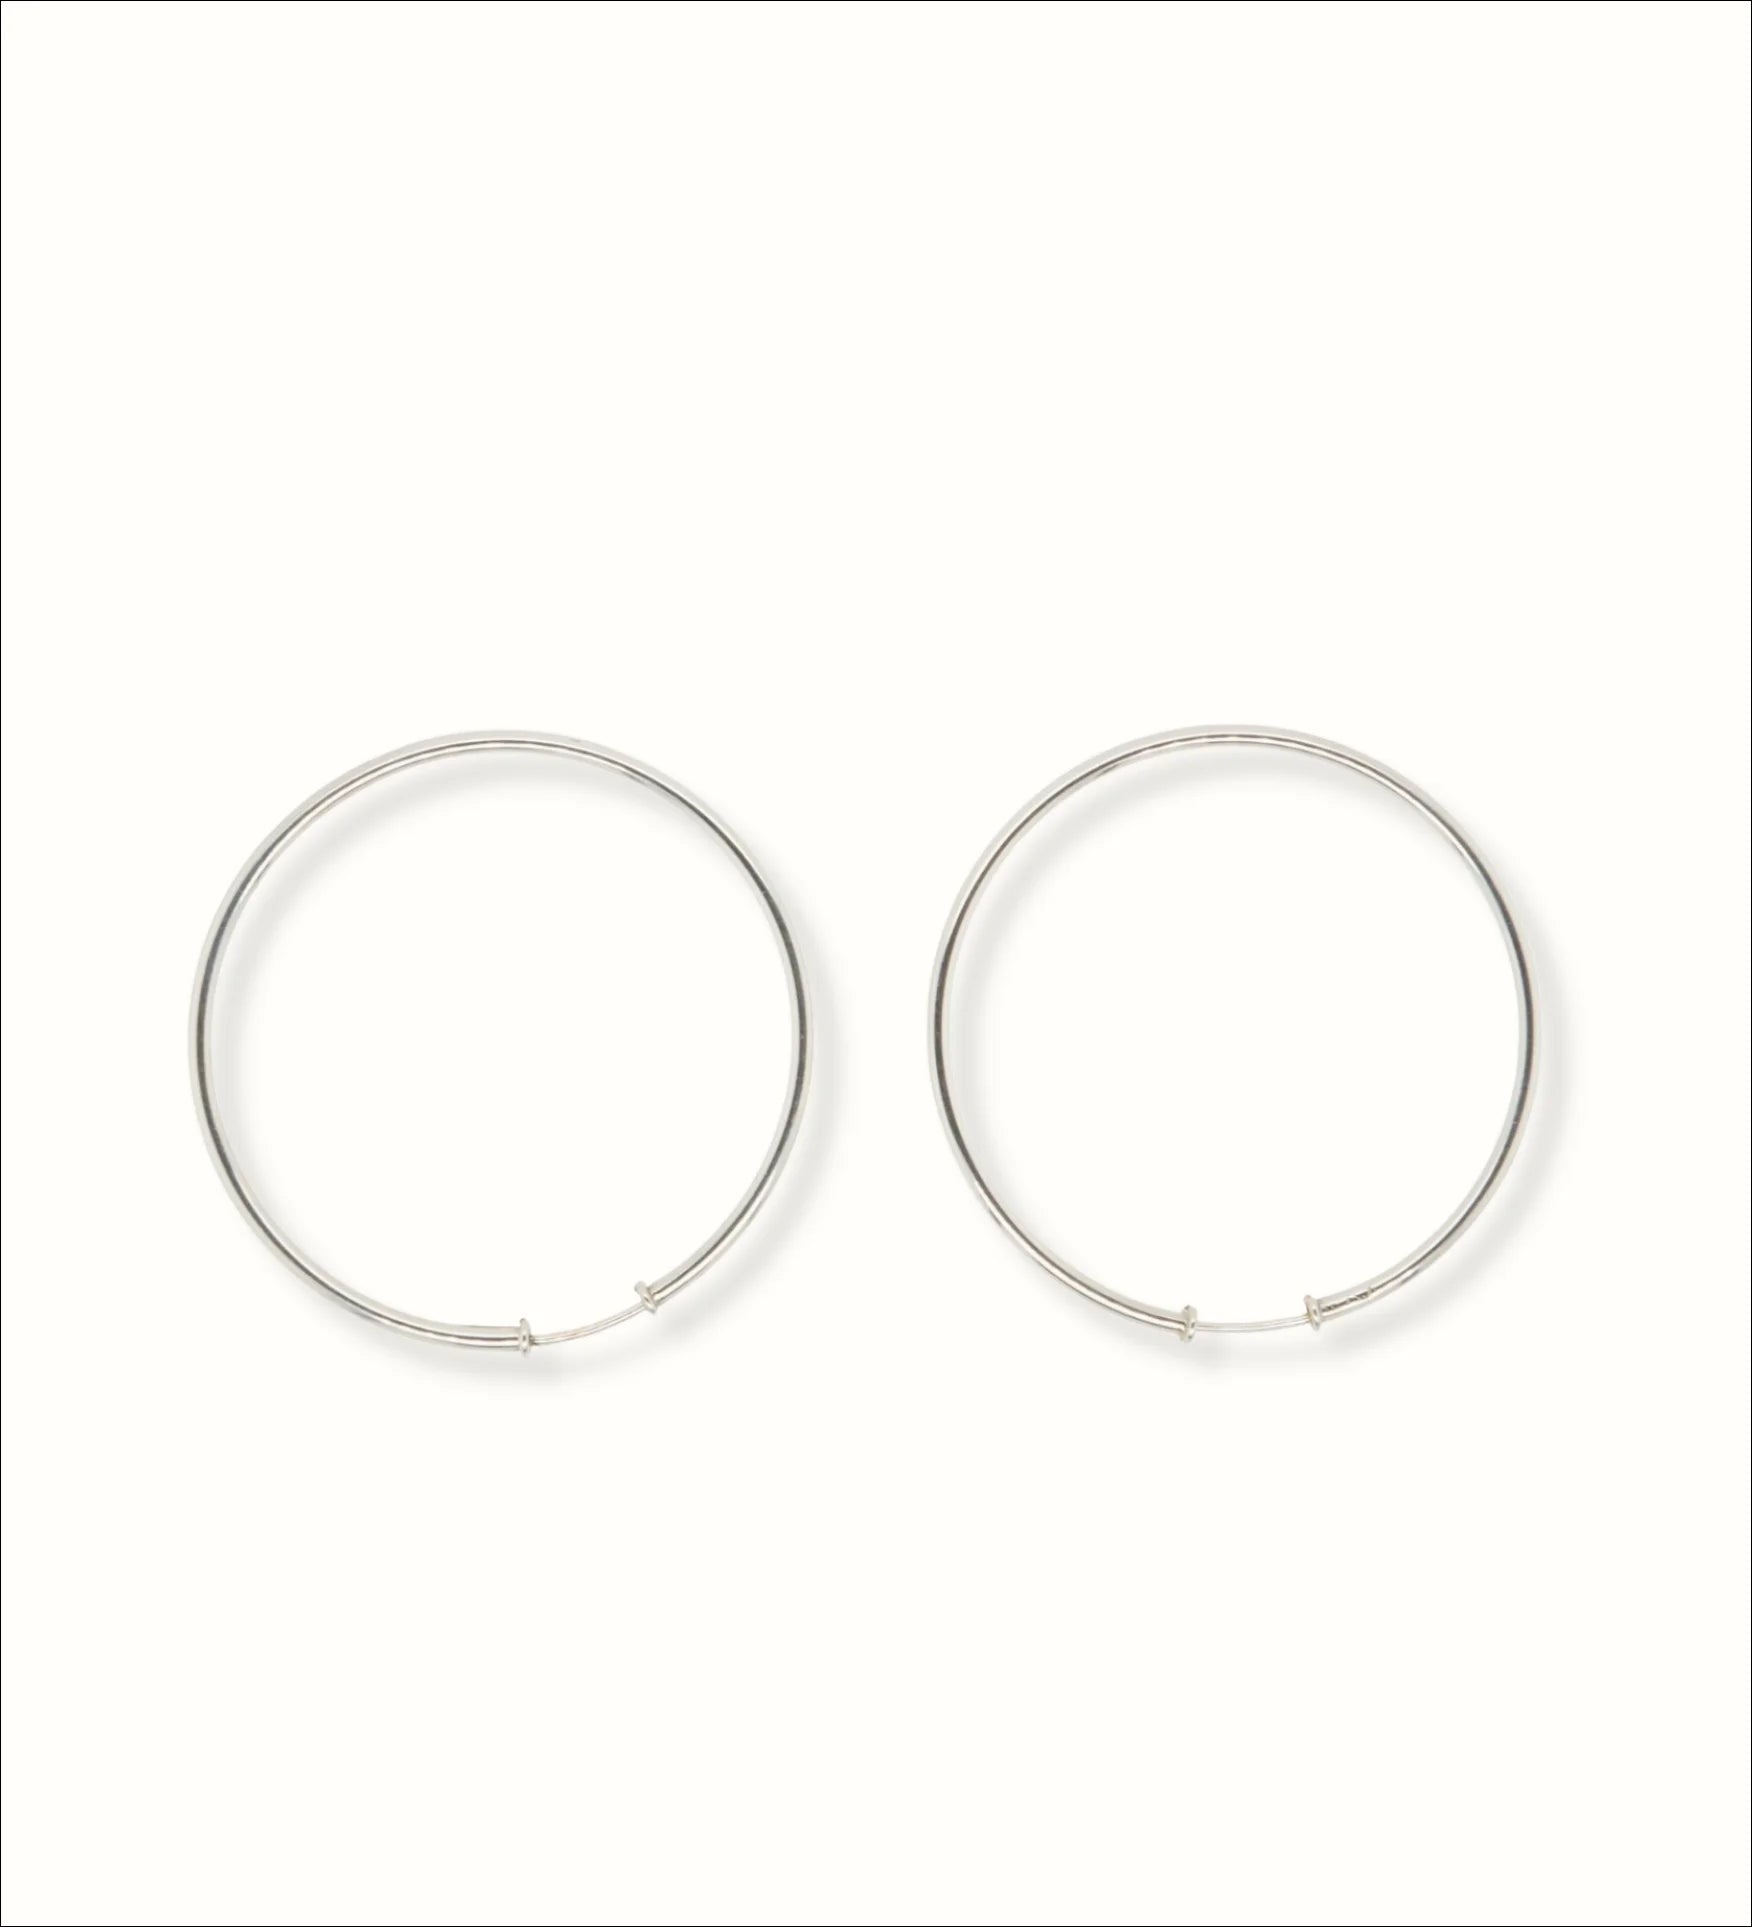 Luxury 18k White Gold Hoop Earrings | Home page